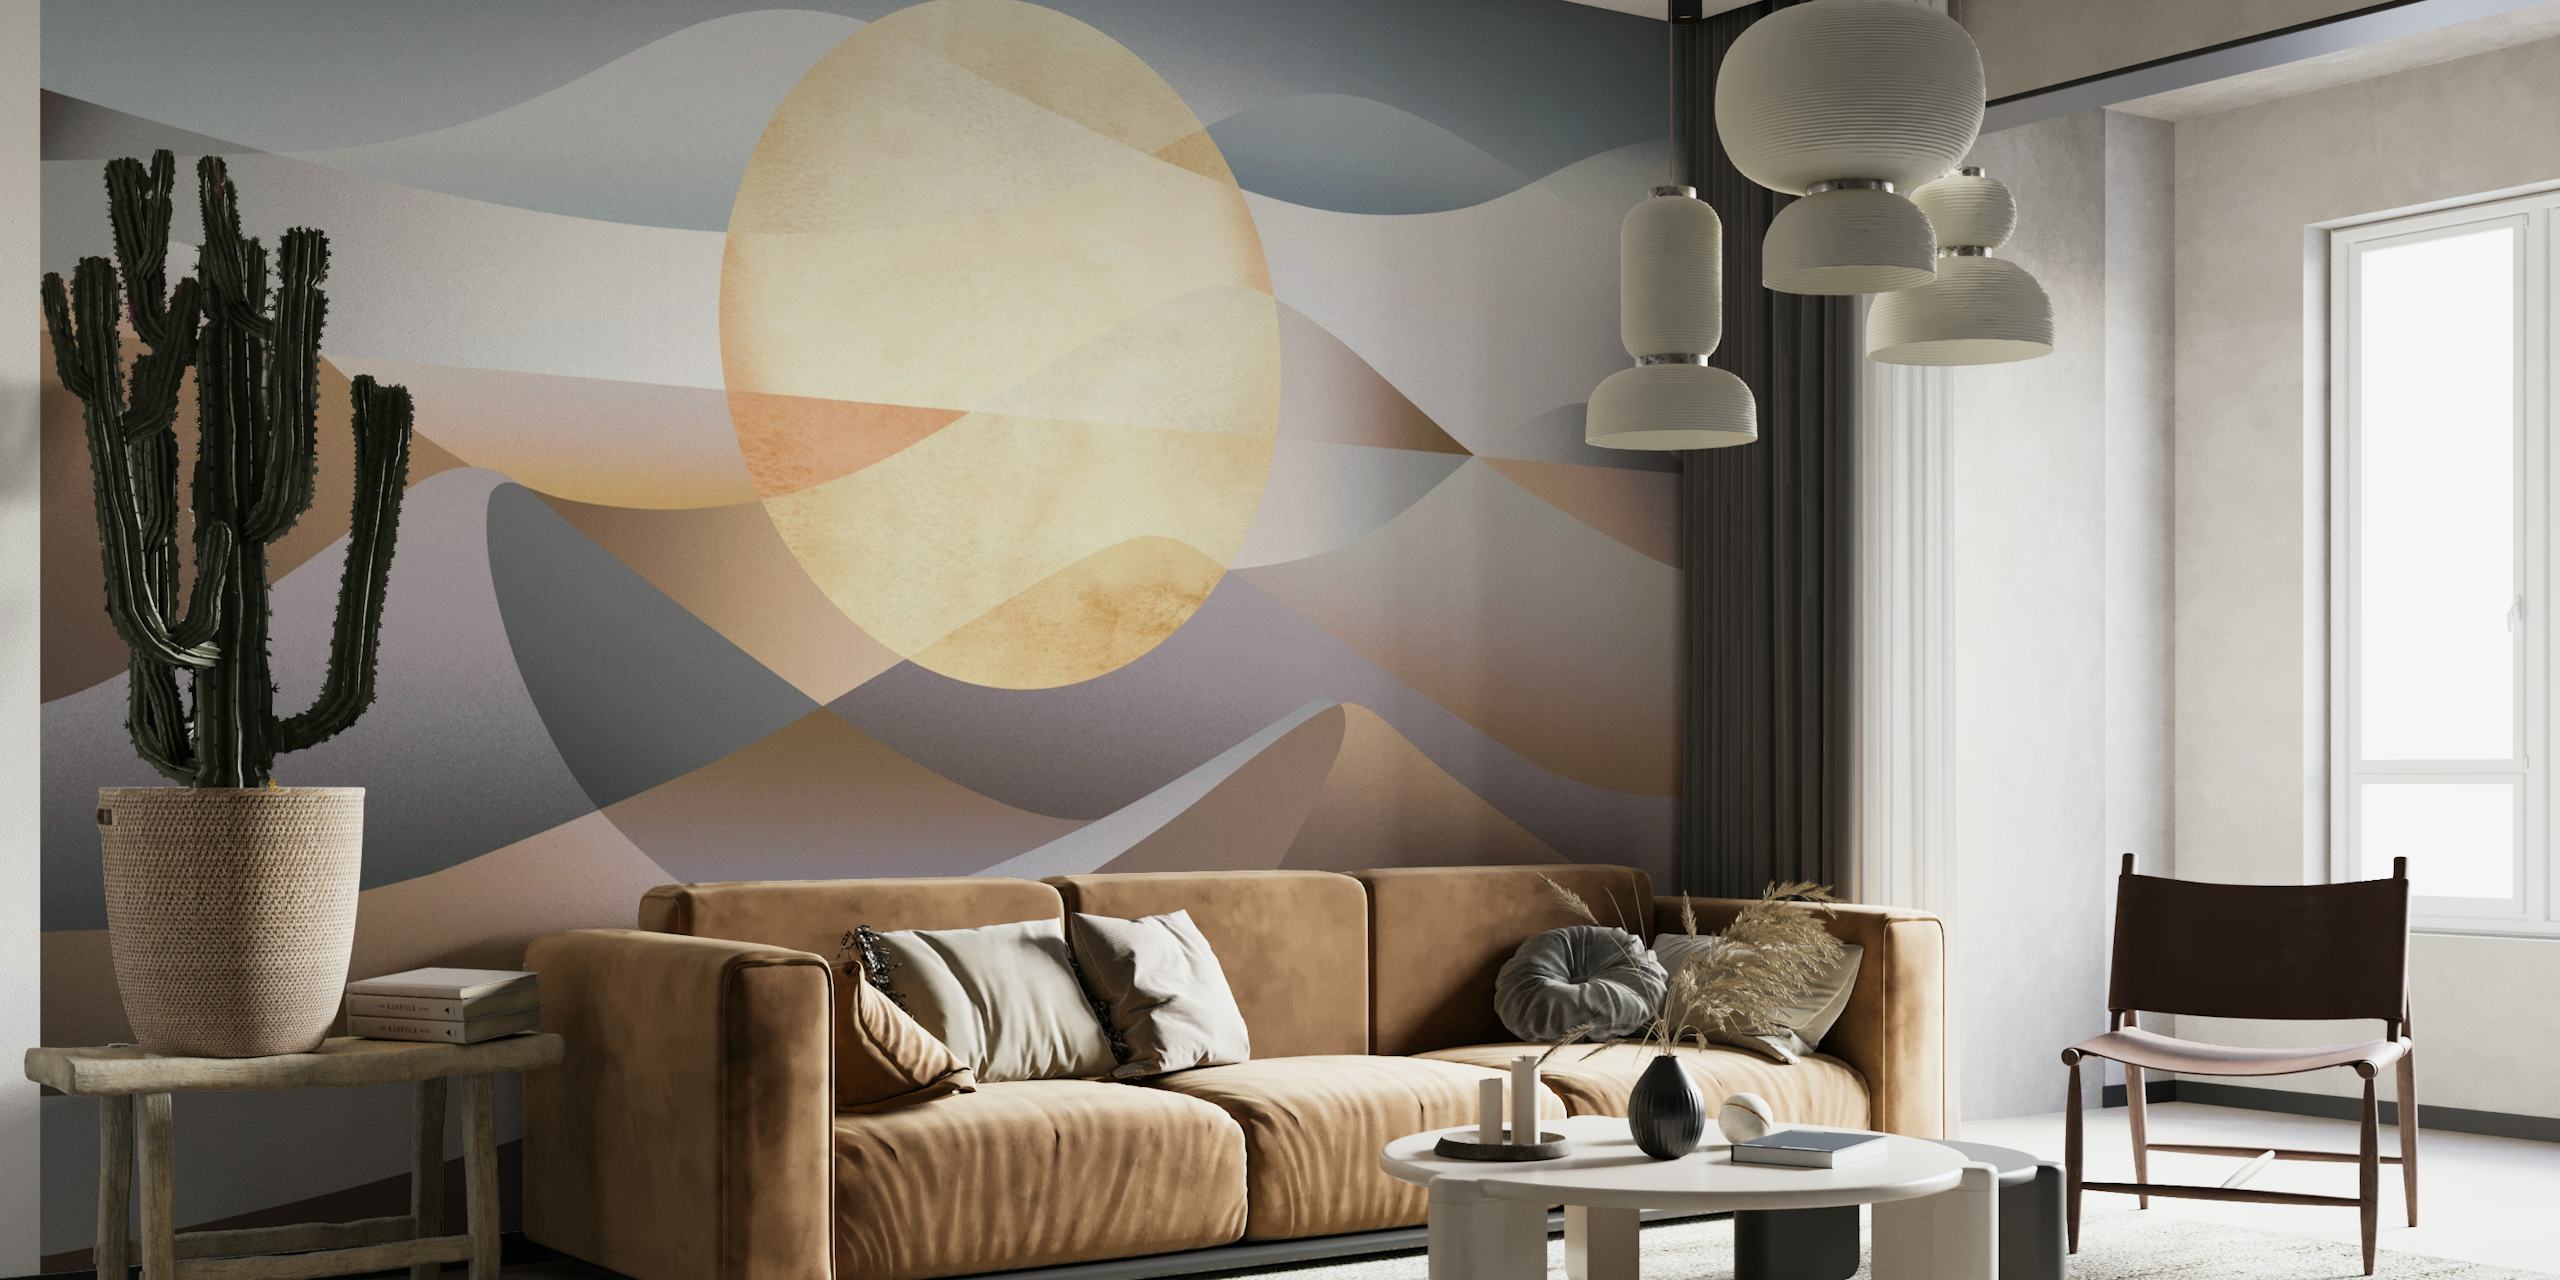 SUNNY LANDSCAPE IN COLD COLORS wallpaper